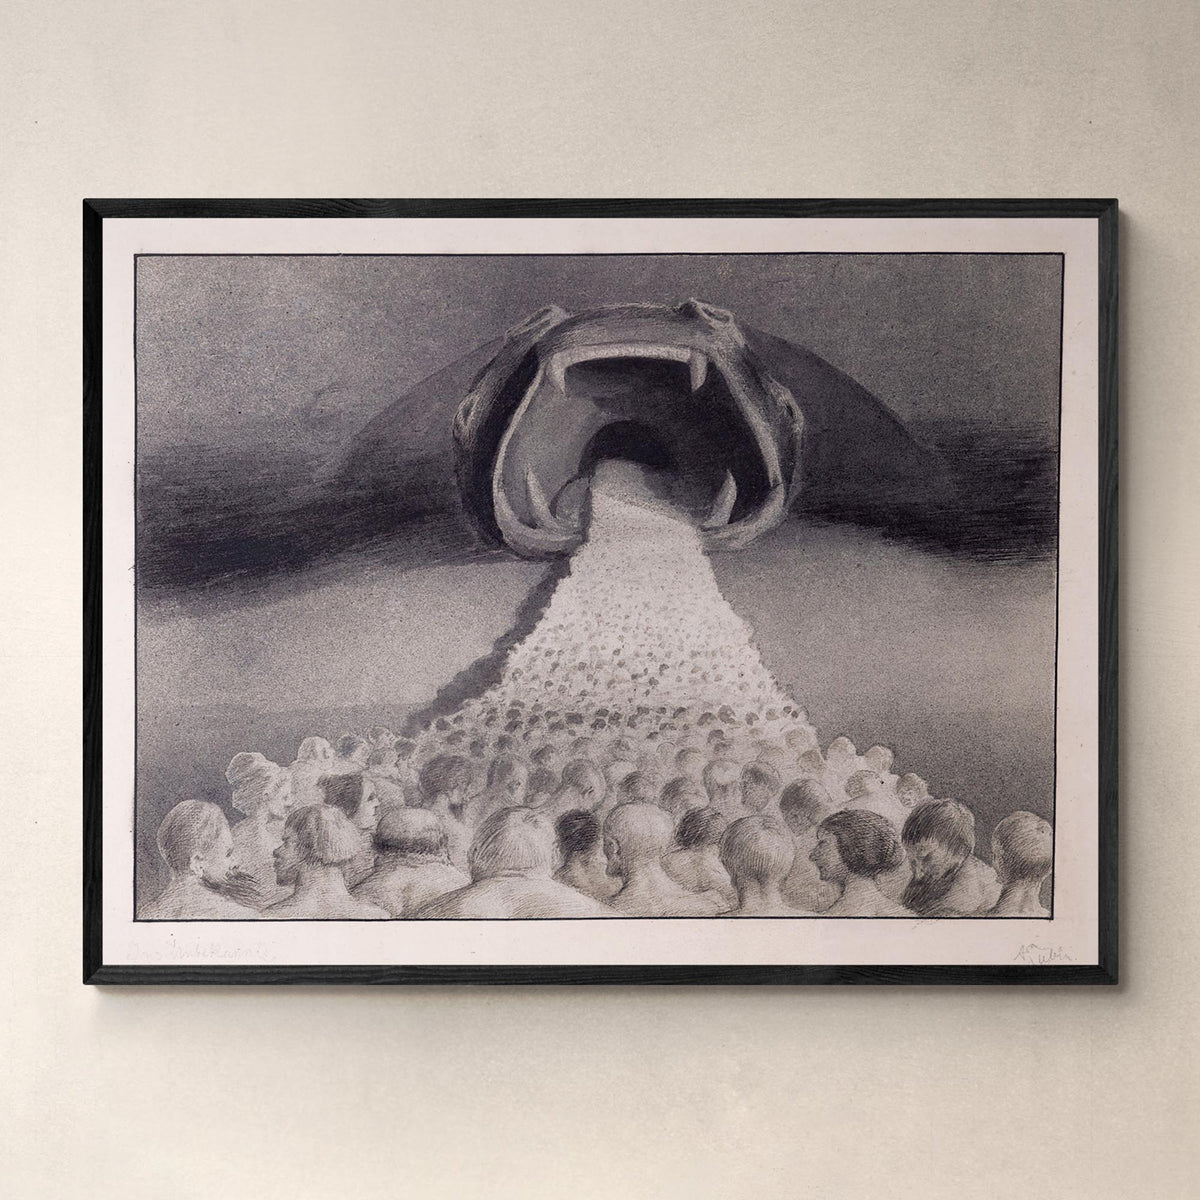 giclee A5 Landscape Alfred Kubin, Vers l’inconnu Symbolist Surrealist Gothic Goth Surreal Occult Supernatural Life and Death Decor Vintage Fine Art Print